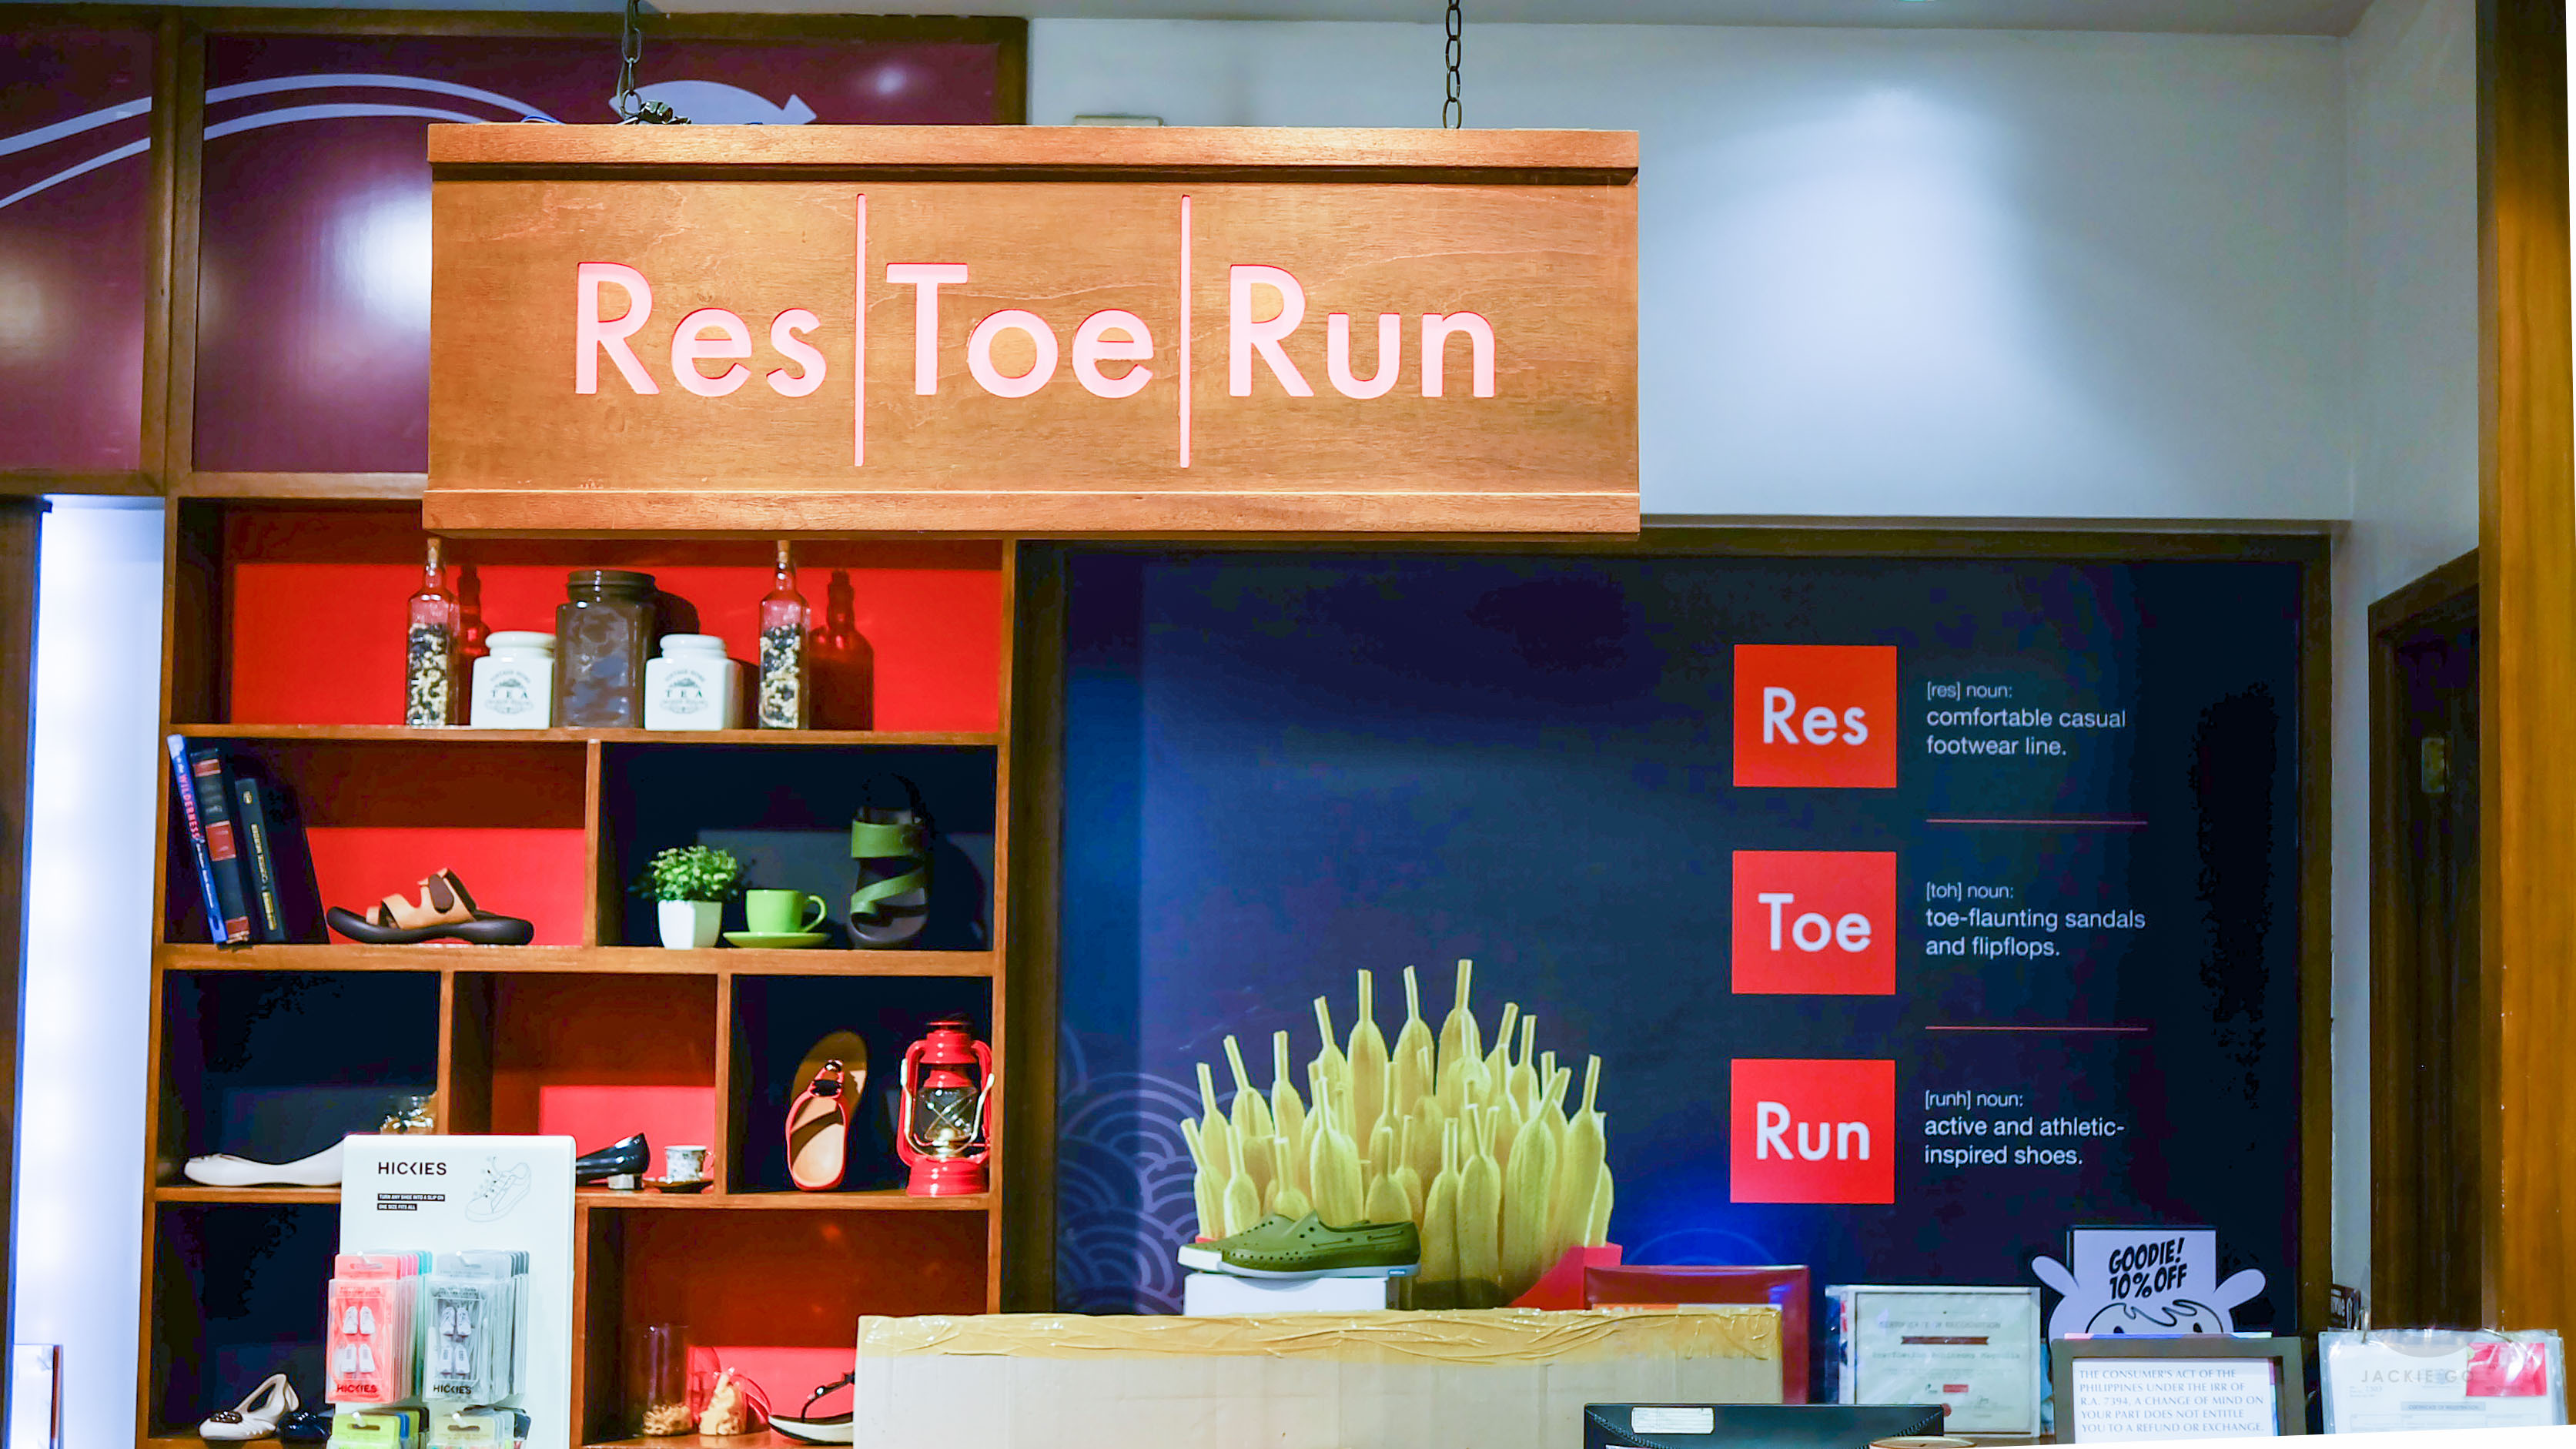 rest toe run shoes